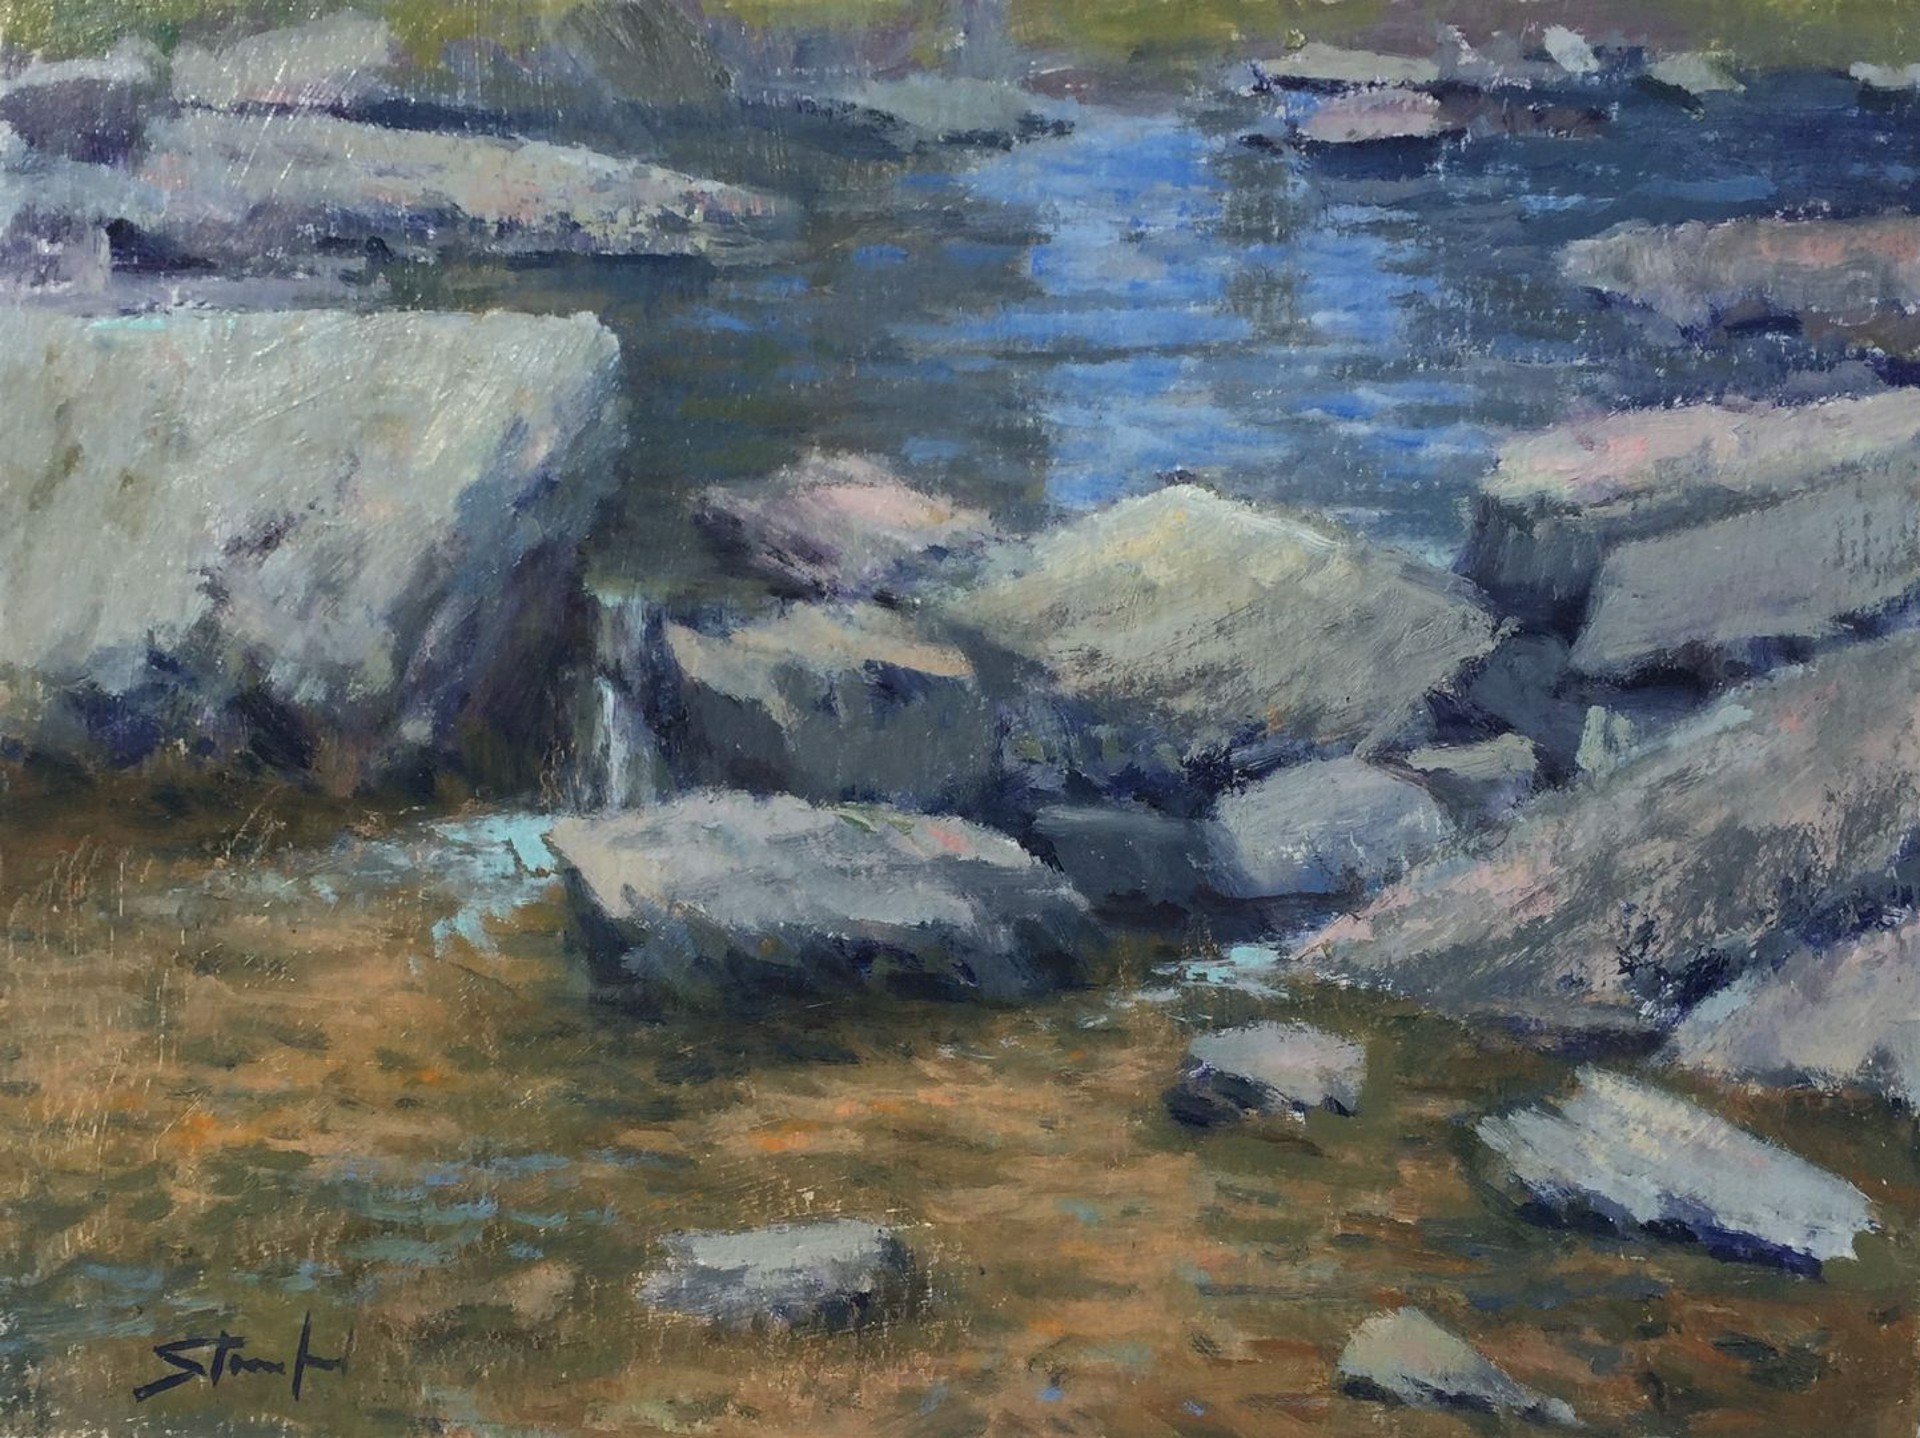 Toccoa River, Georgia by John Stanford